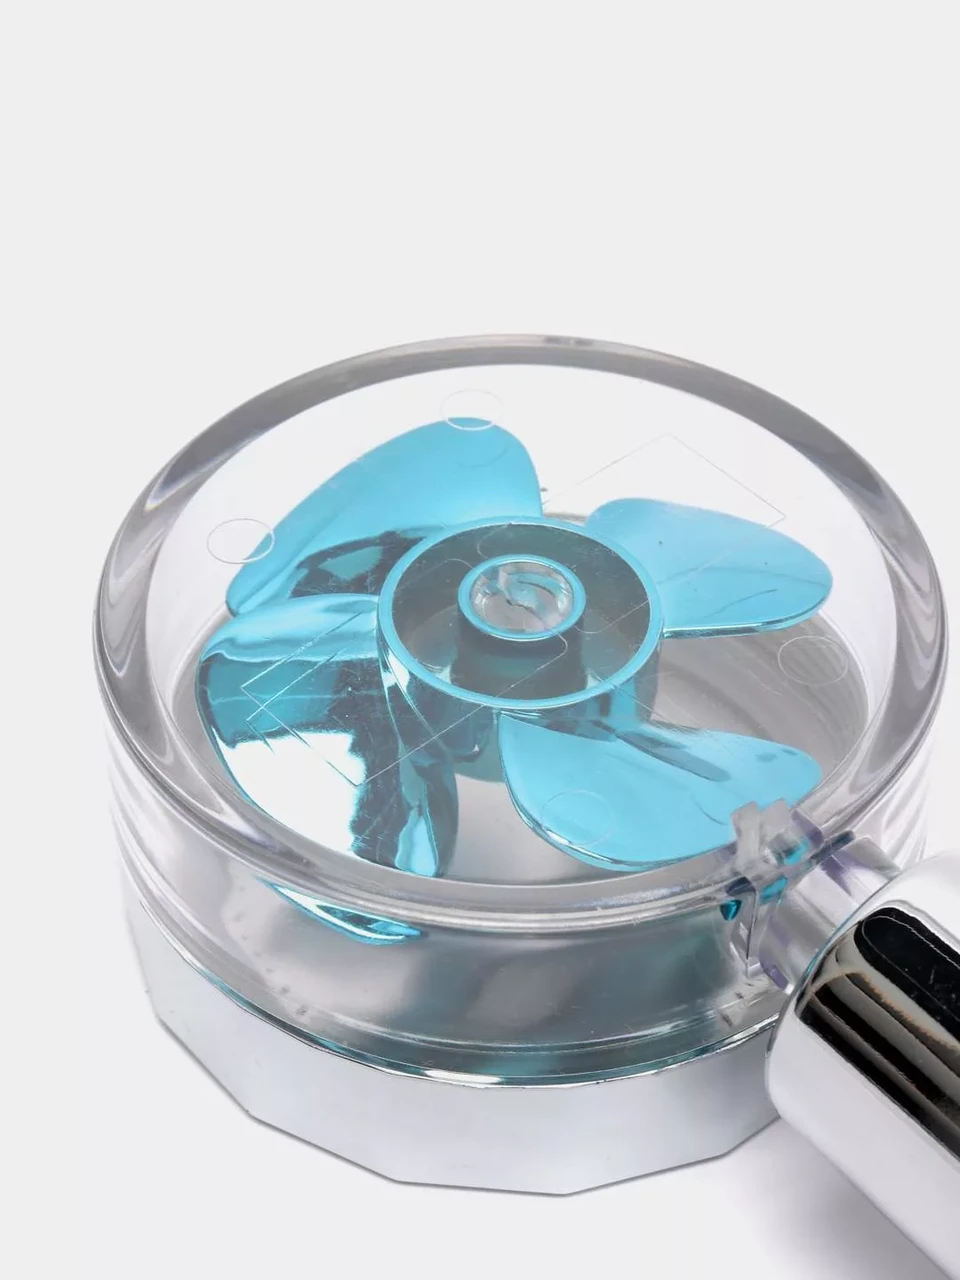 Насадка - лейка для душа с вентилятором Turbocharged Water Saving Shower SV 0615 (голубой)